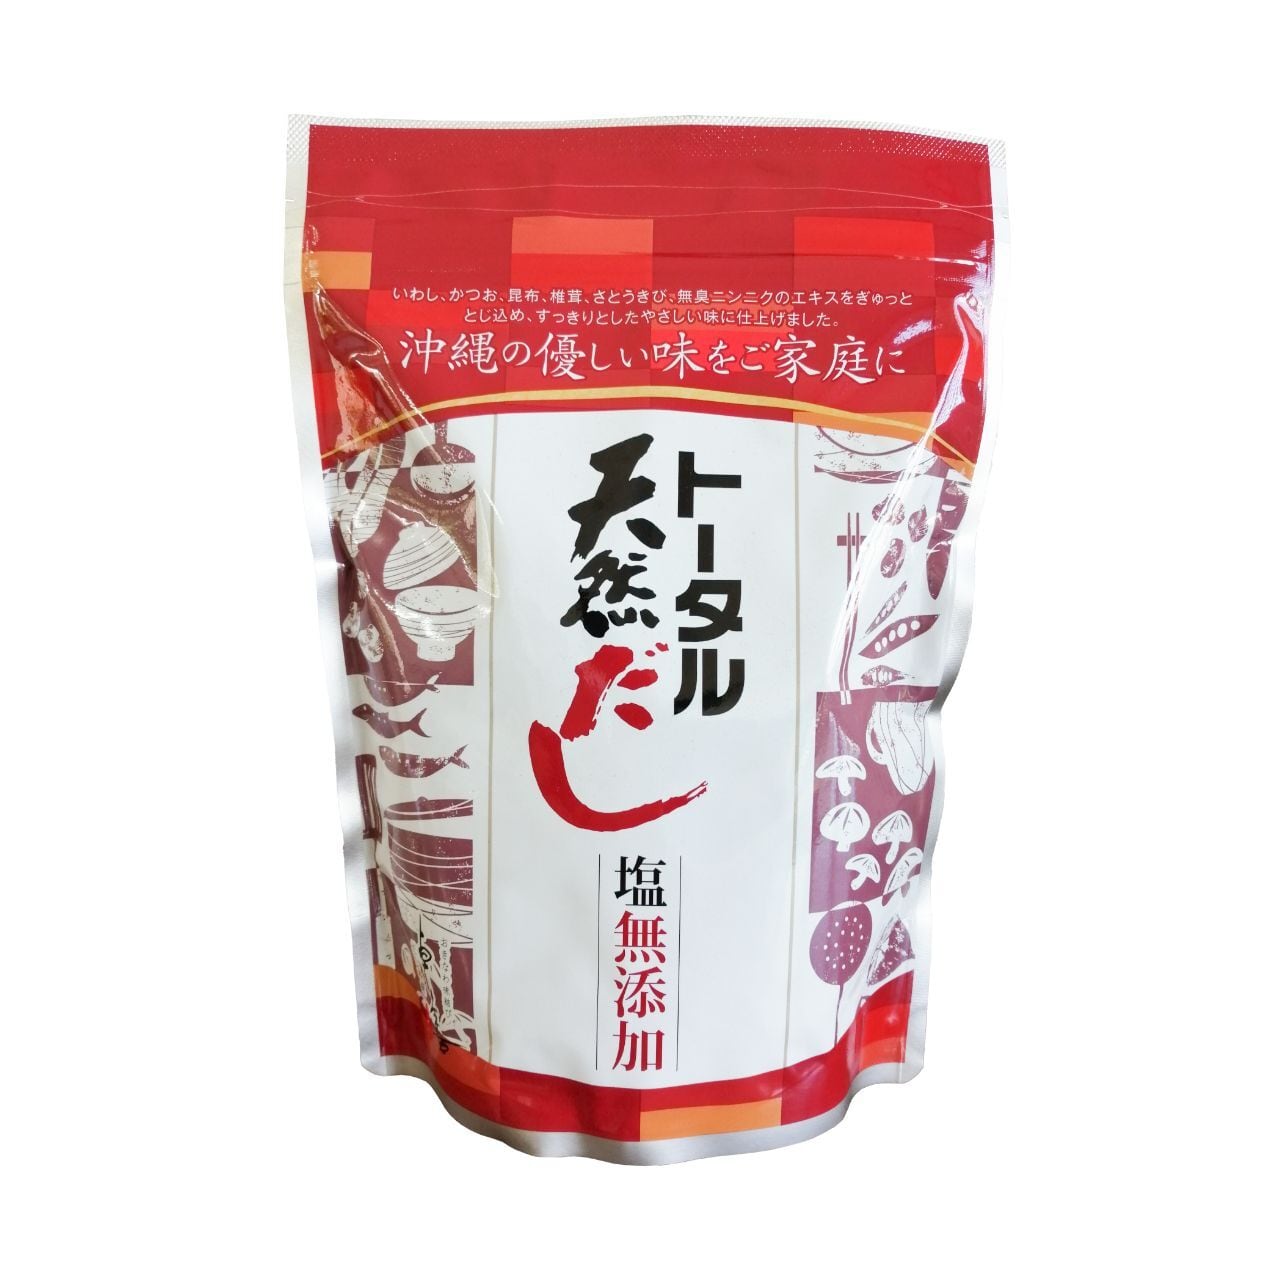 Natural Dashi Powder Sodium Free Japanese Soup Stock 500g